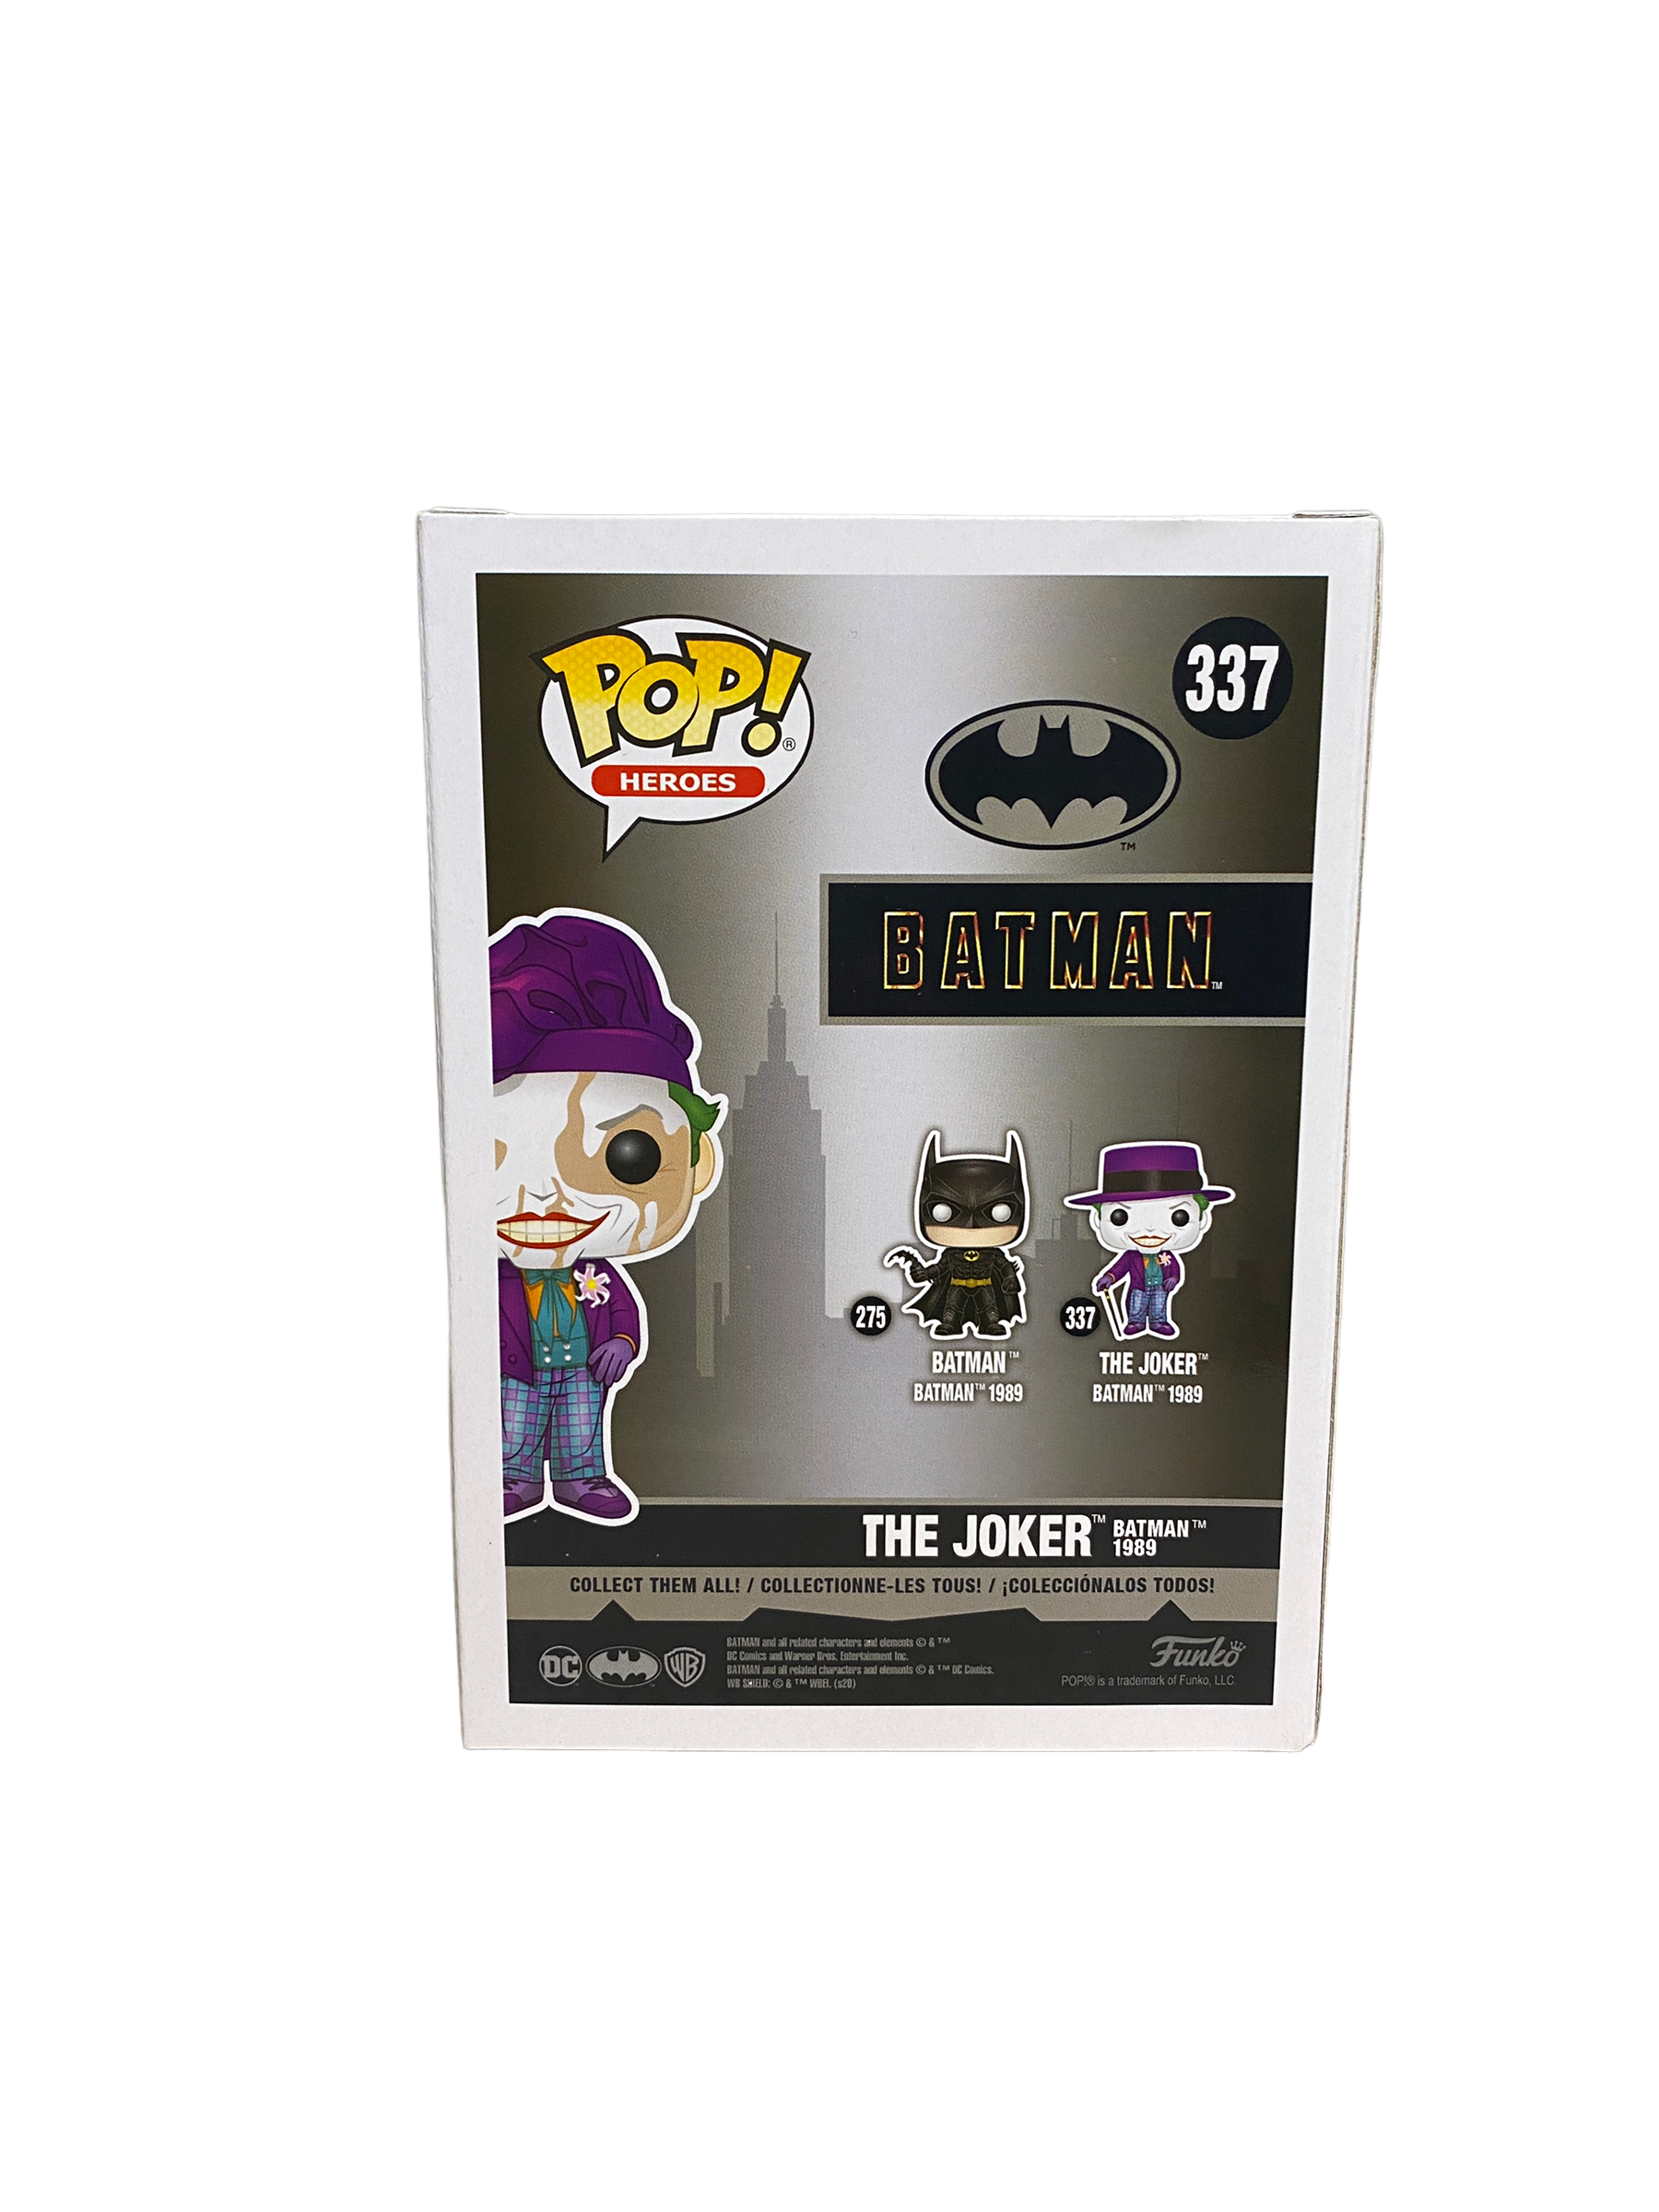 The Joker Batman 1989 #337 (w/ Beret Metallic Chase) Funko Pop! - Batman - 2021 Pop! - Condition 9.5/10